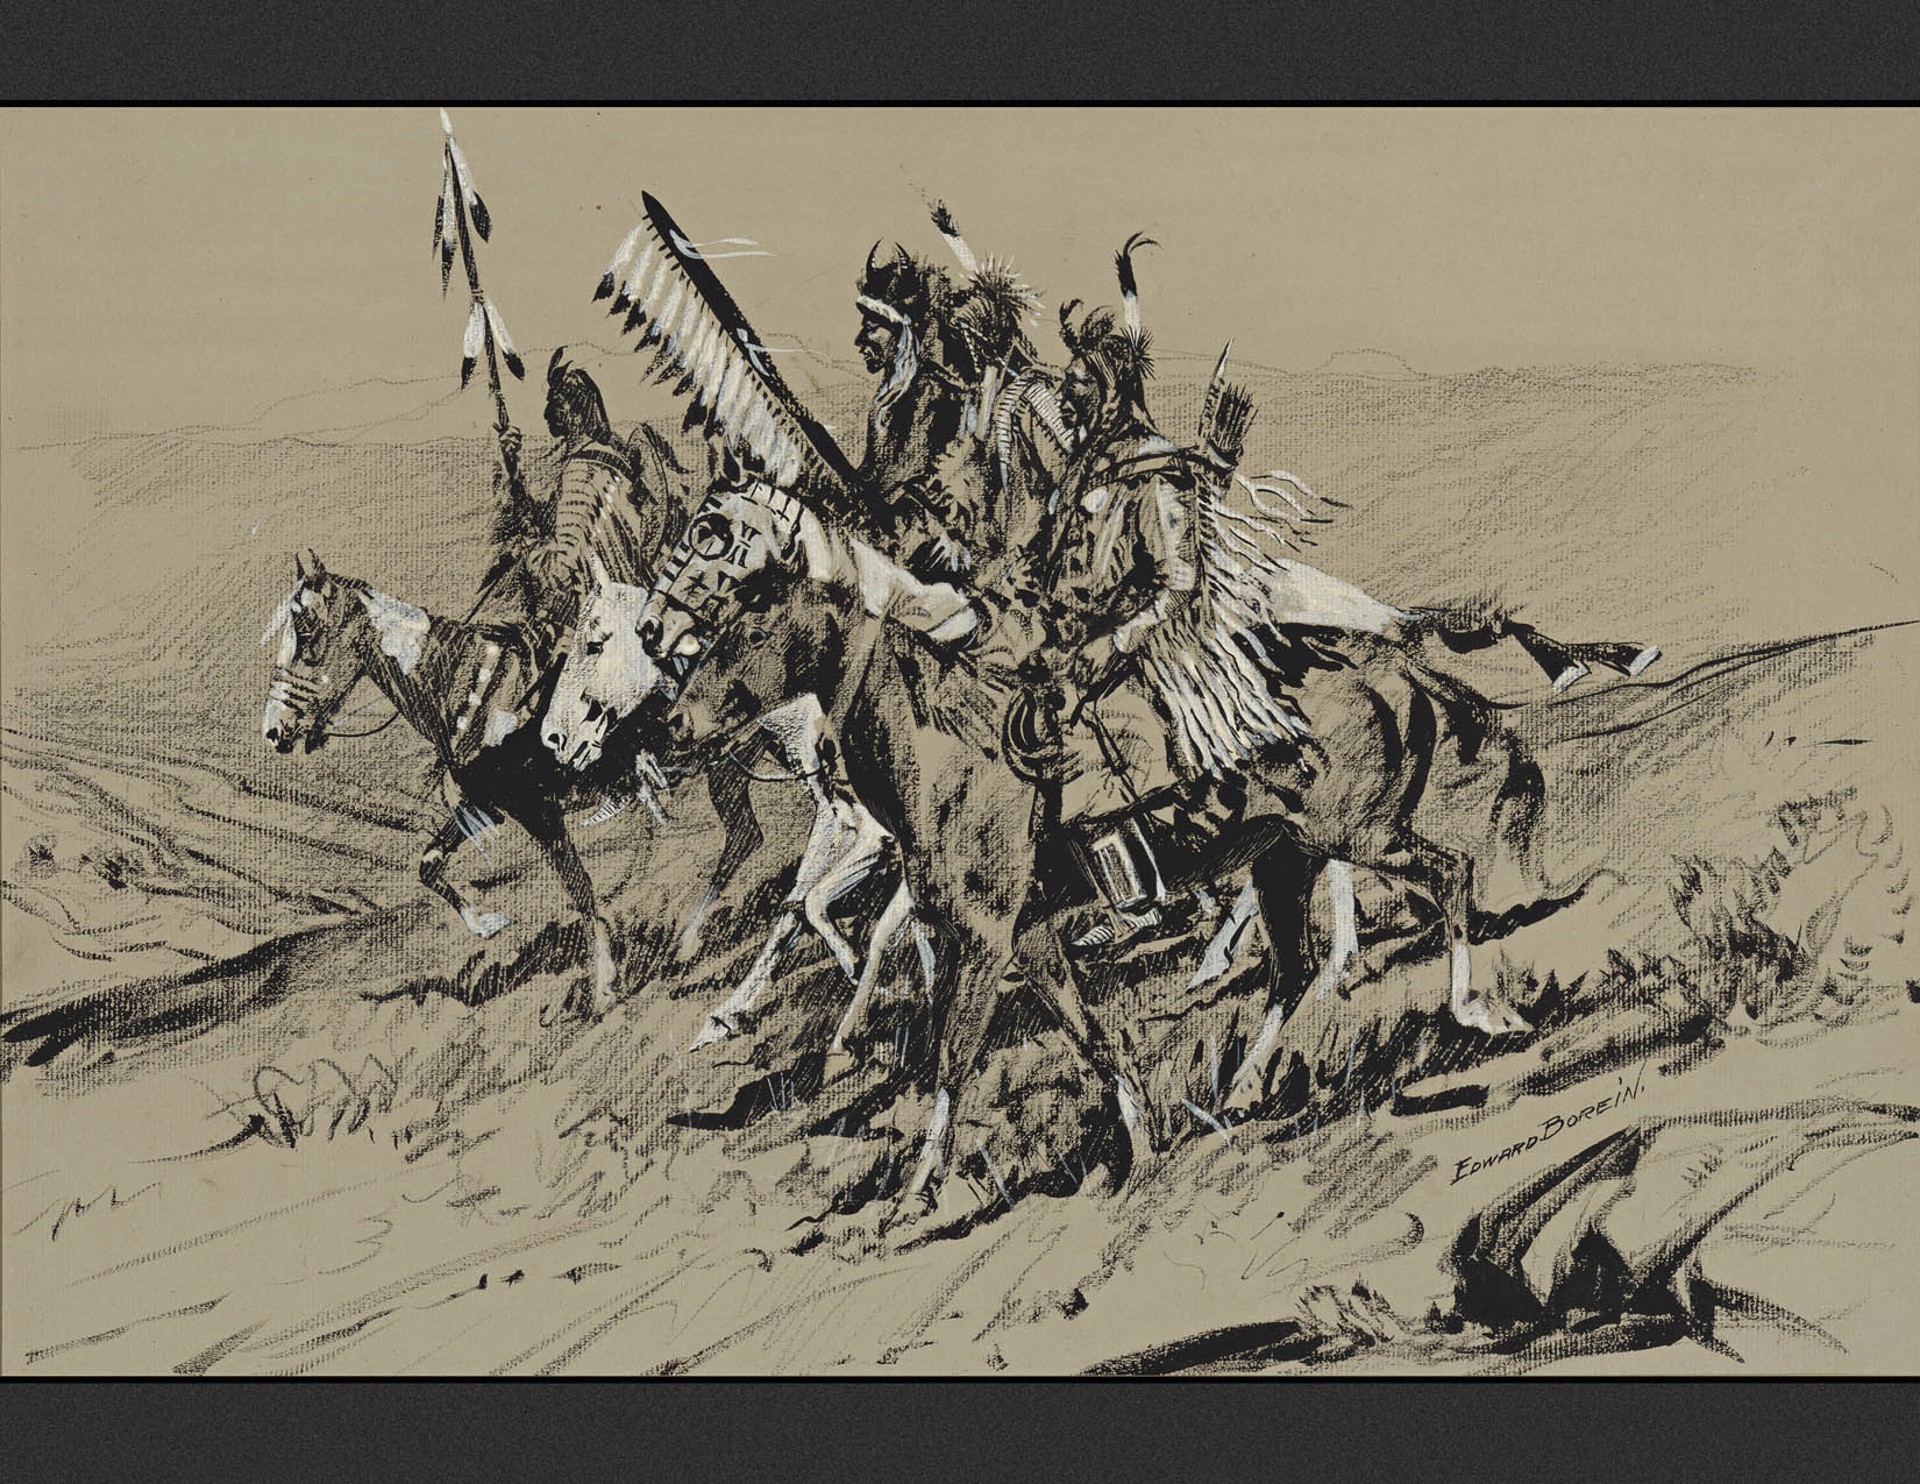 Blackfeet War Party by Edward Borein